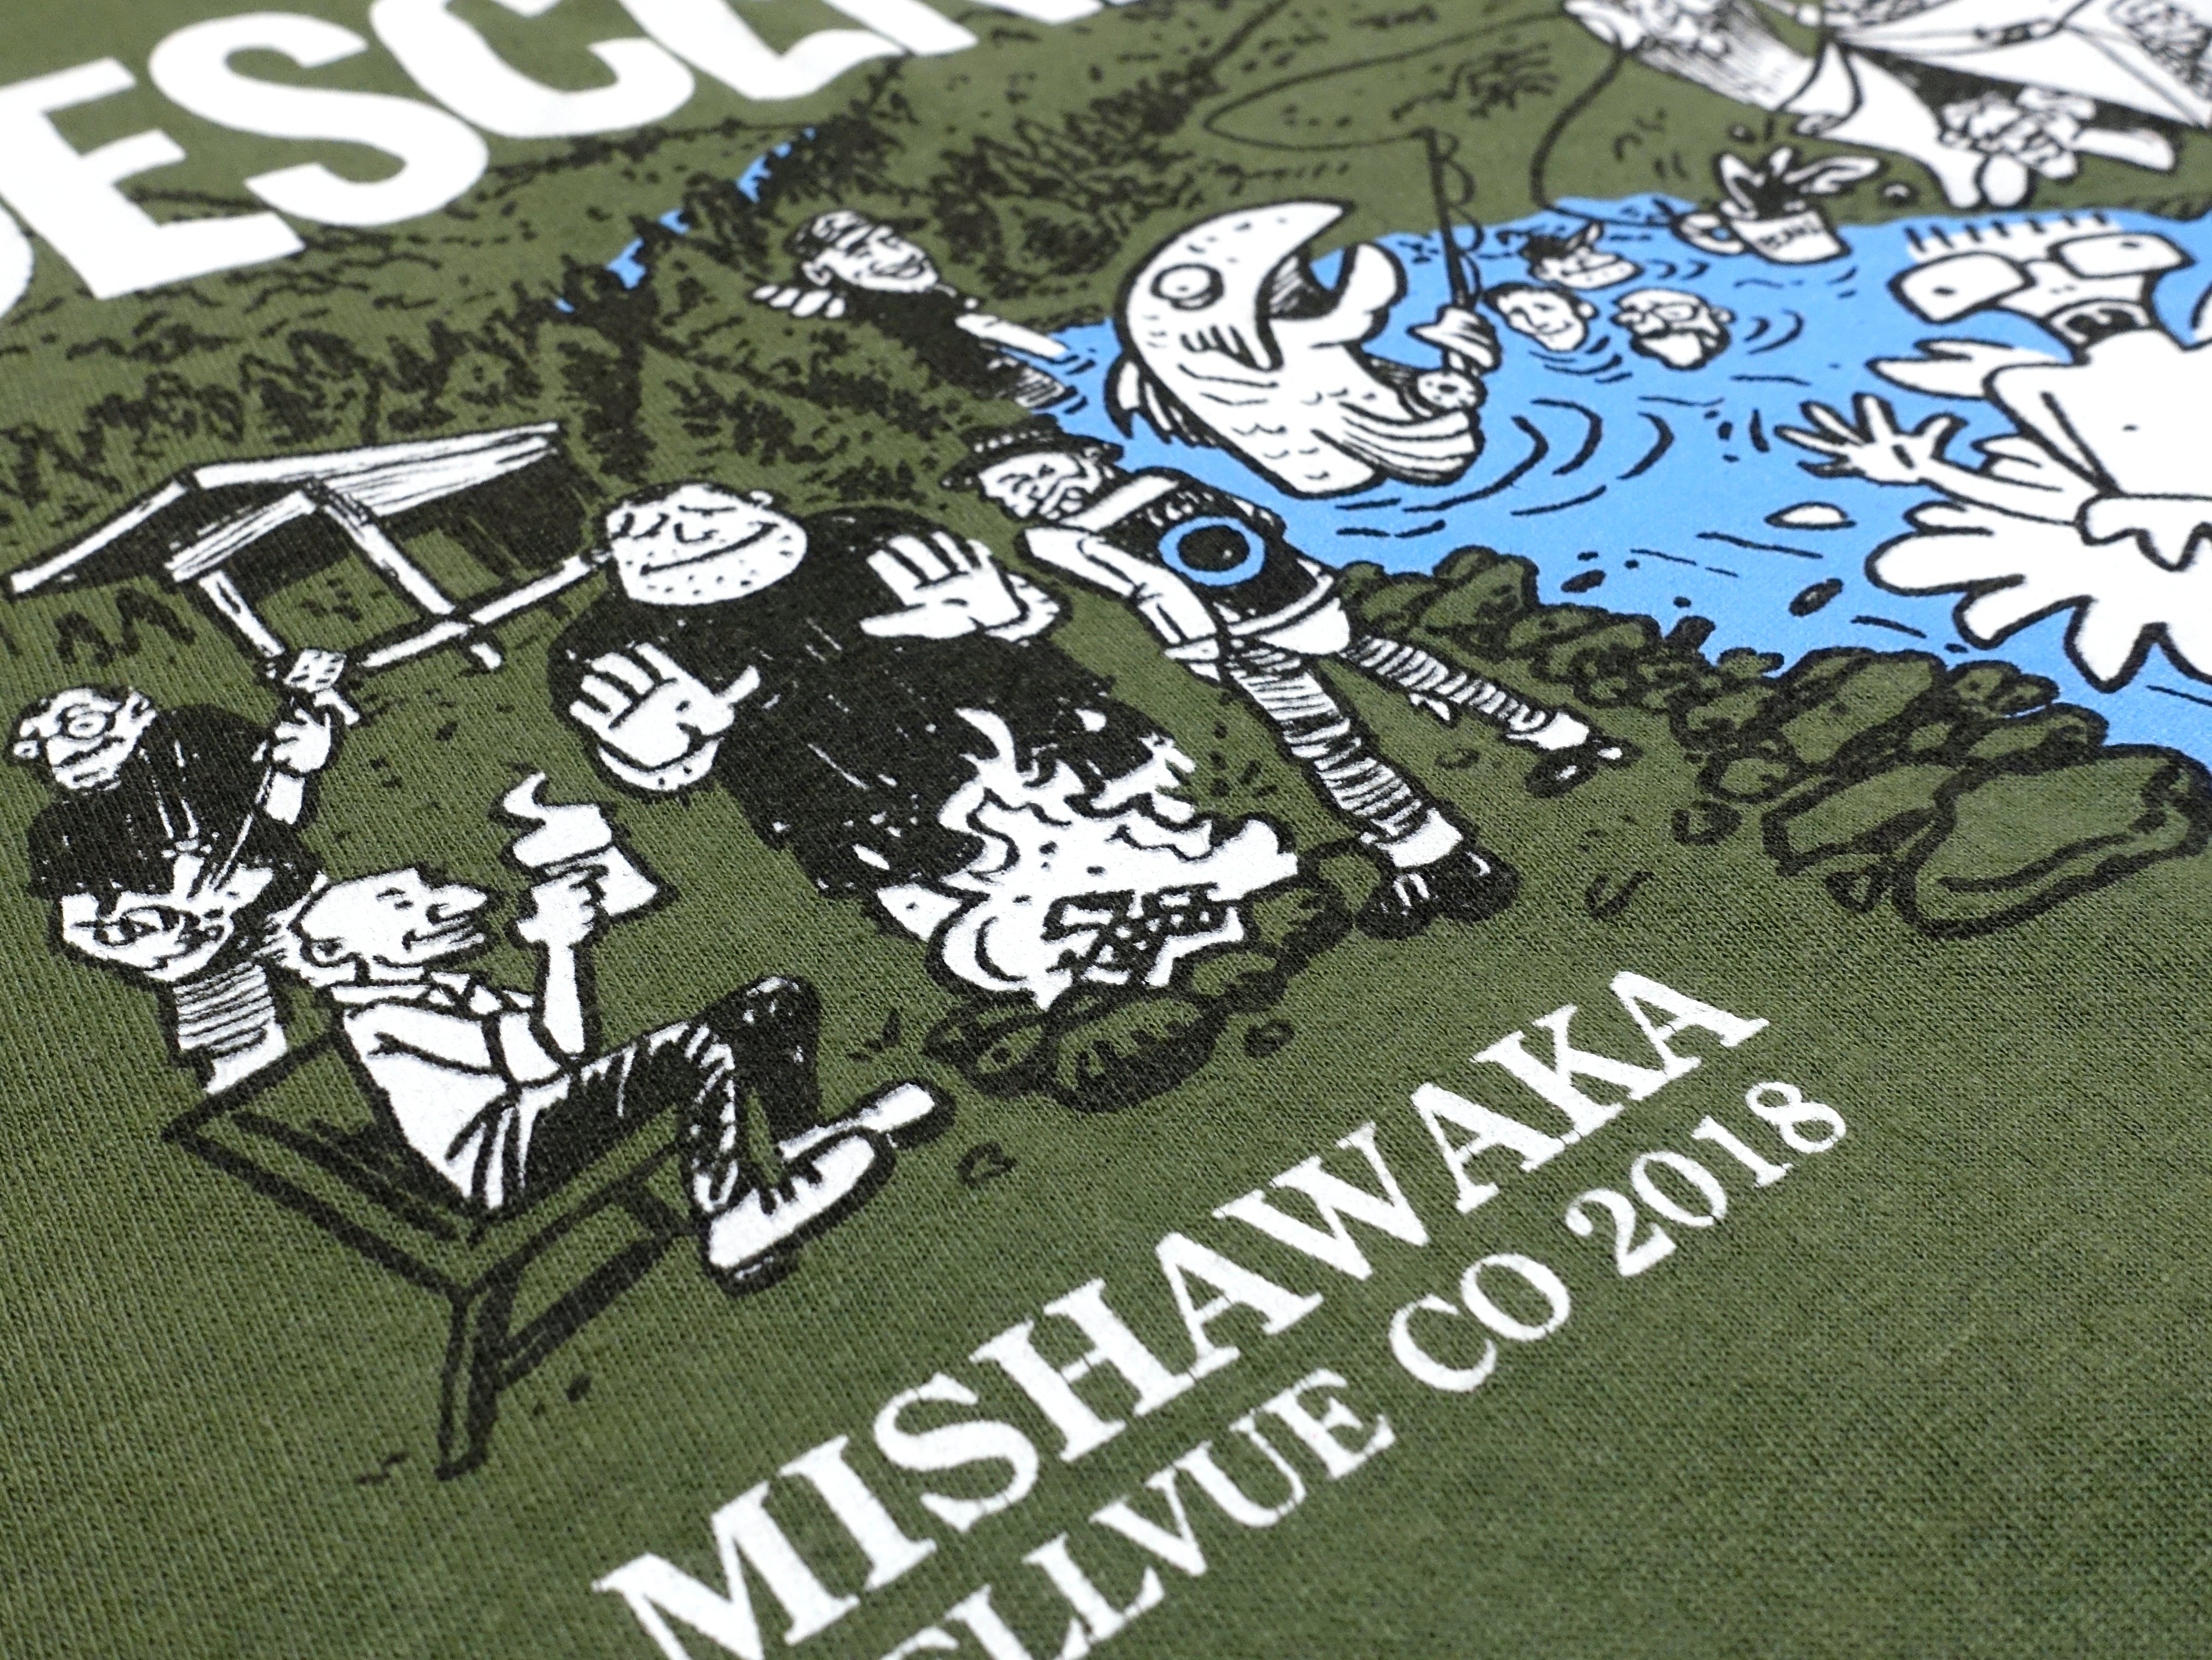 Descendents - Mishawaka 2018 Tour Shirt Size Medium